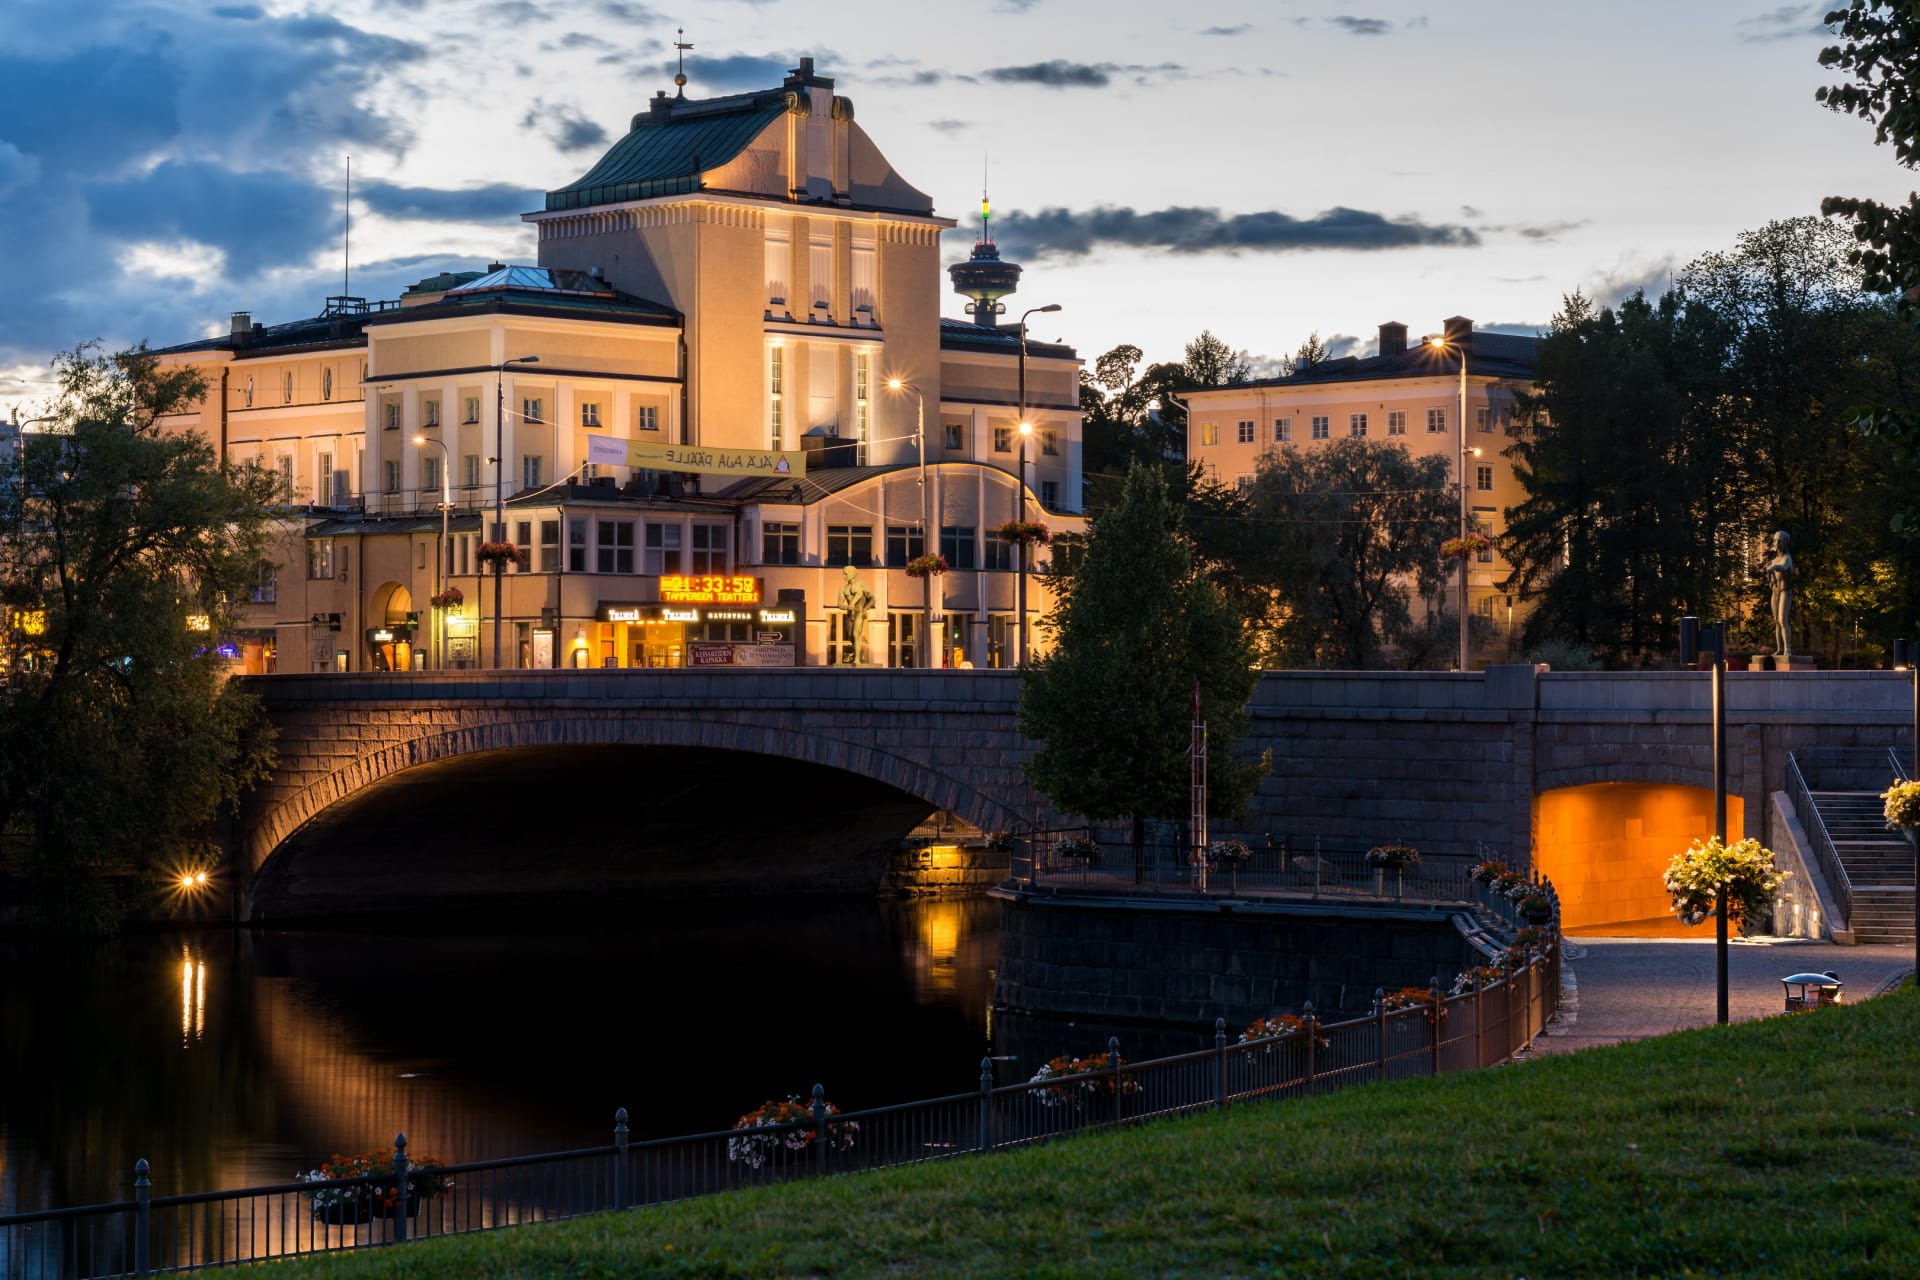 Hämeensilta bridge at night.